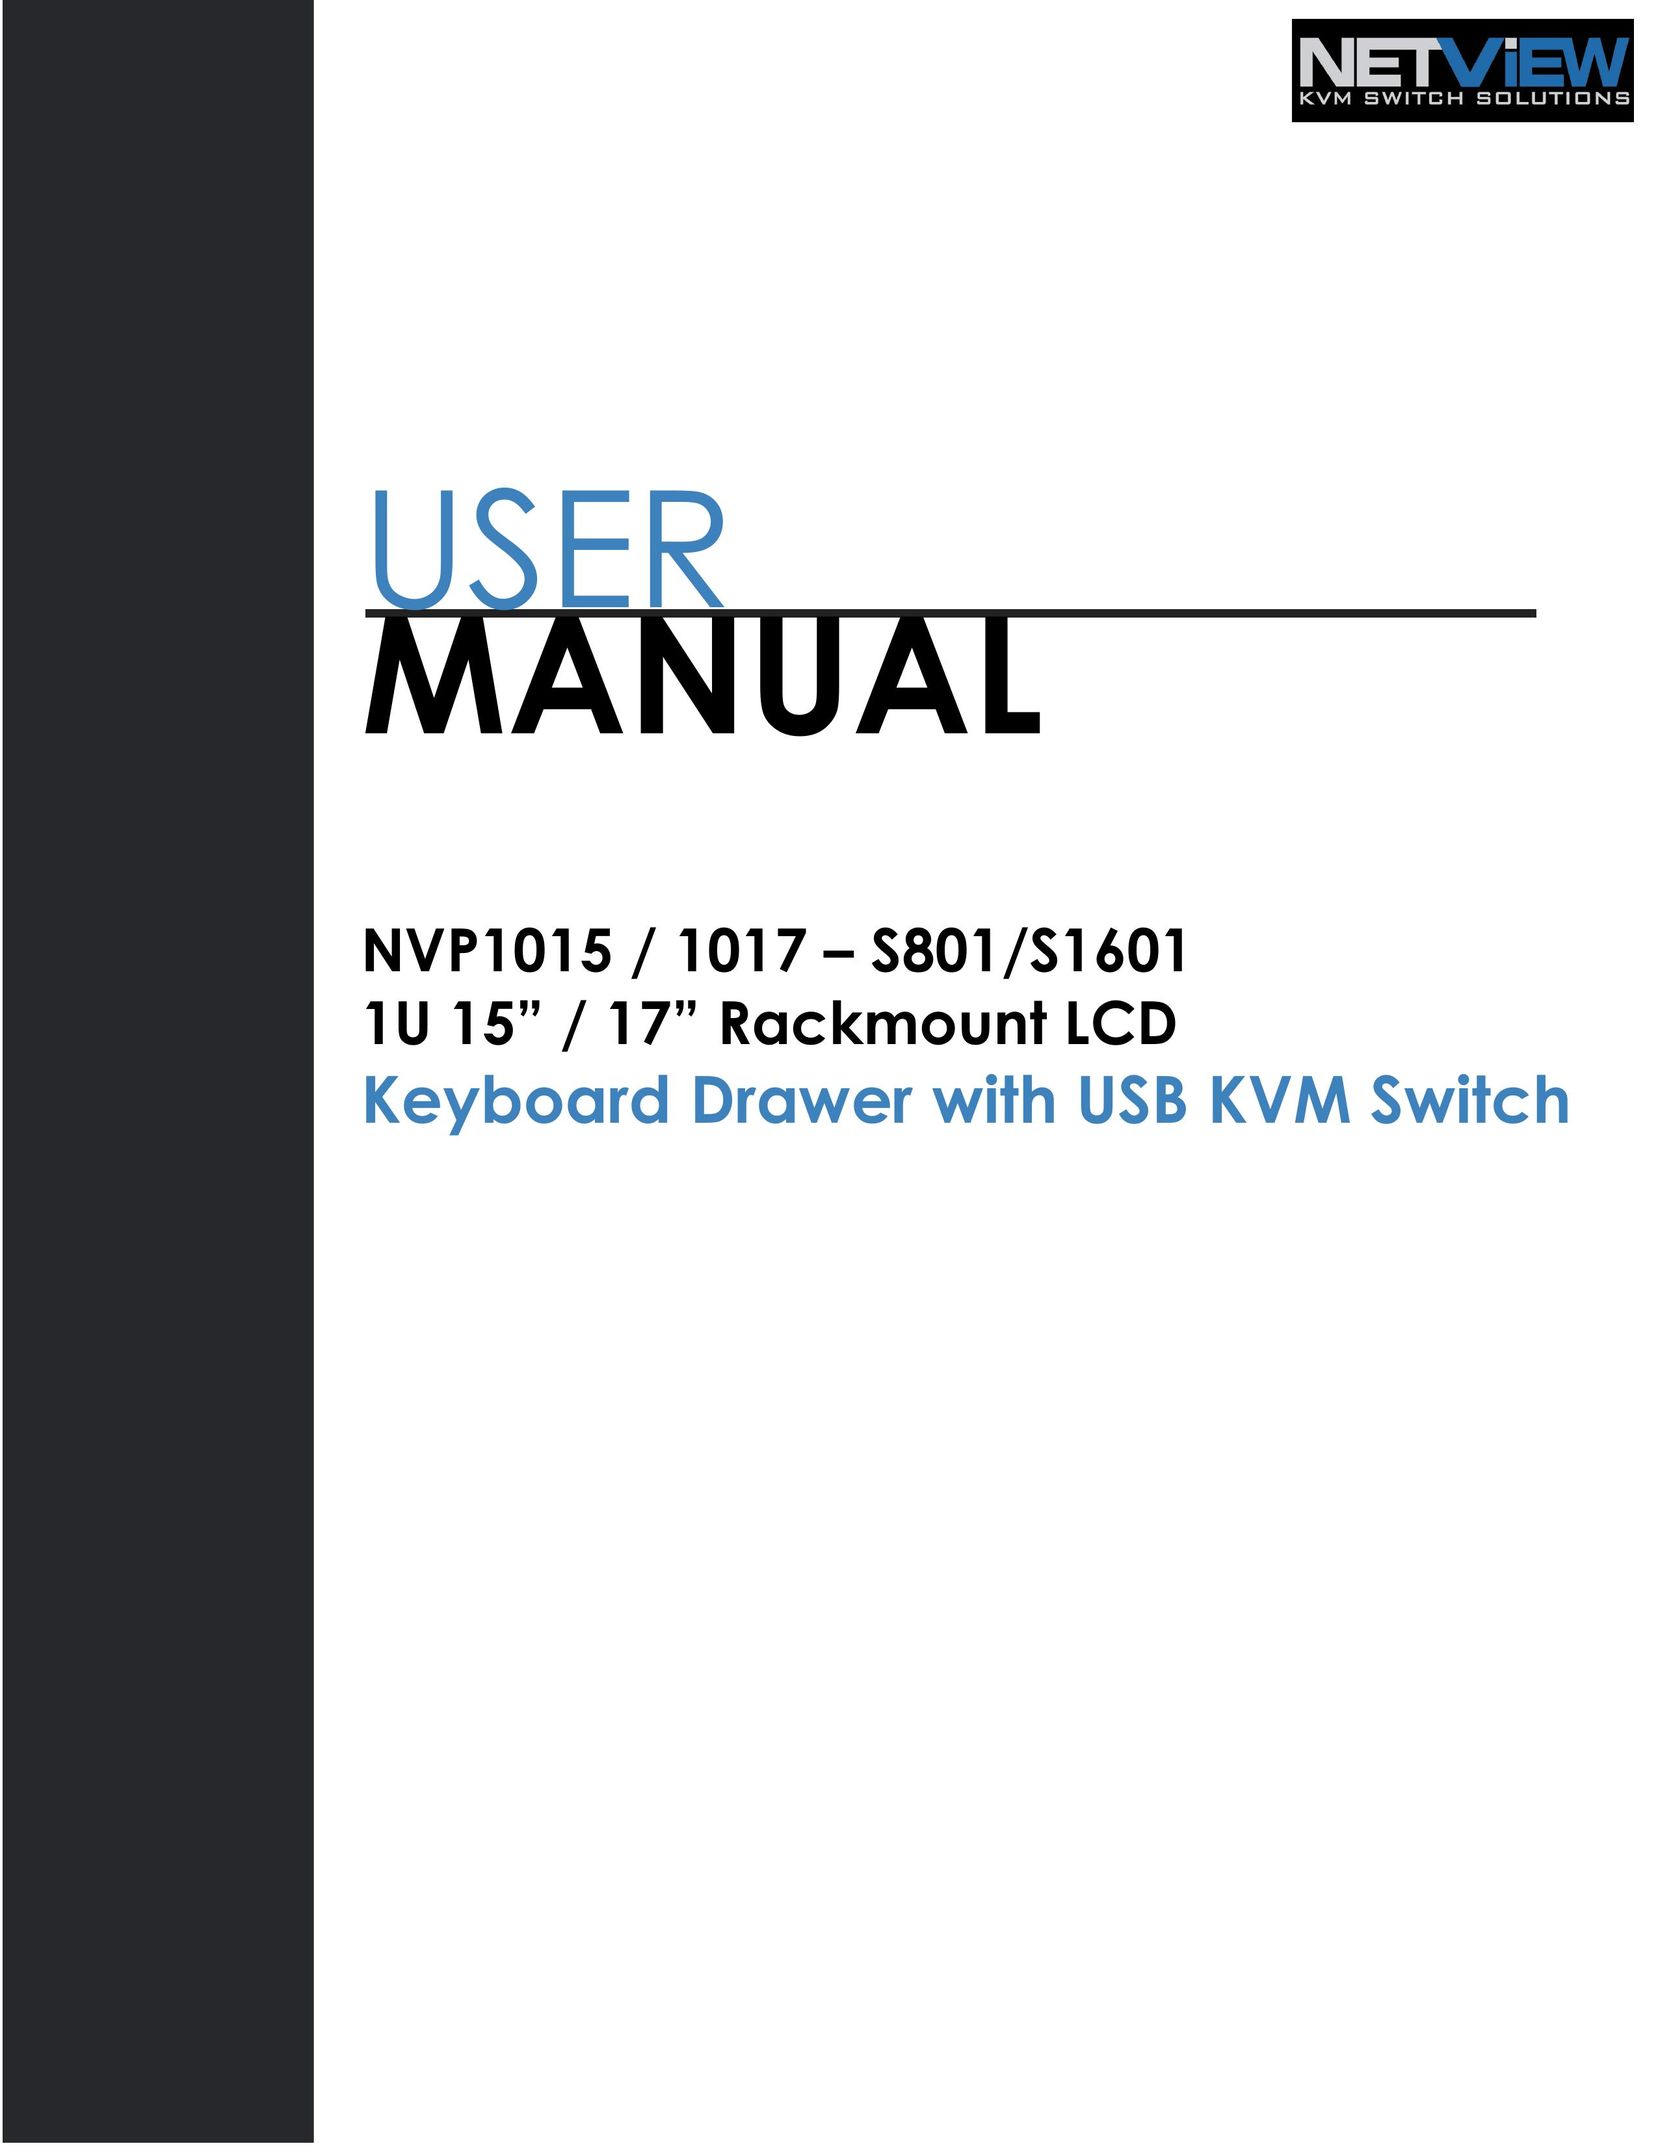 I-Tech Company NVP1017 TV Mount User Manual